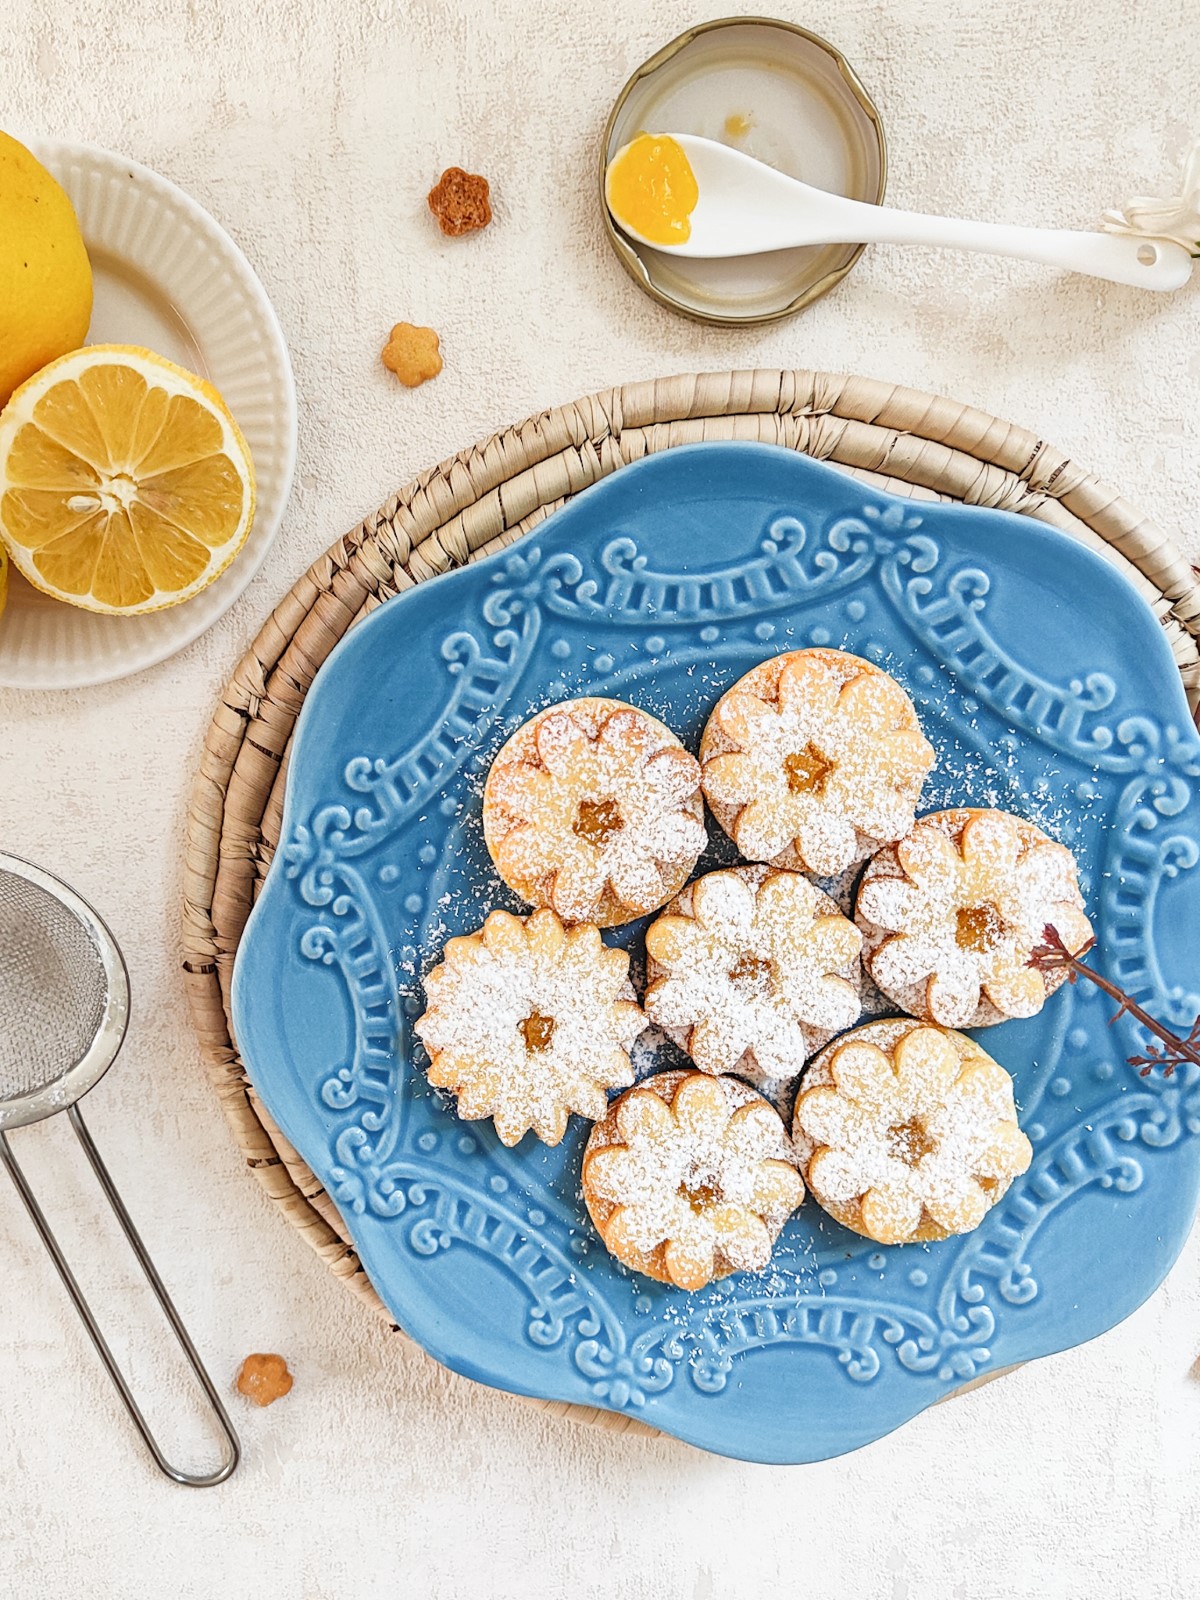 Masleni piškoti z limoninim curdom - Butter cookies with lemon curd